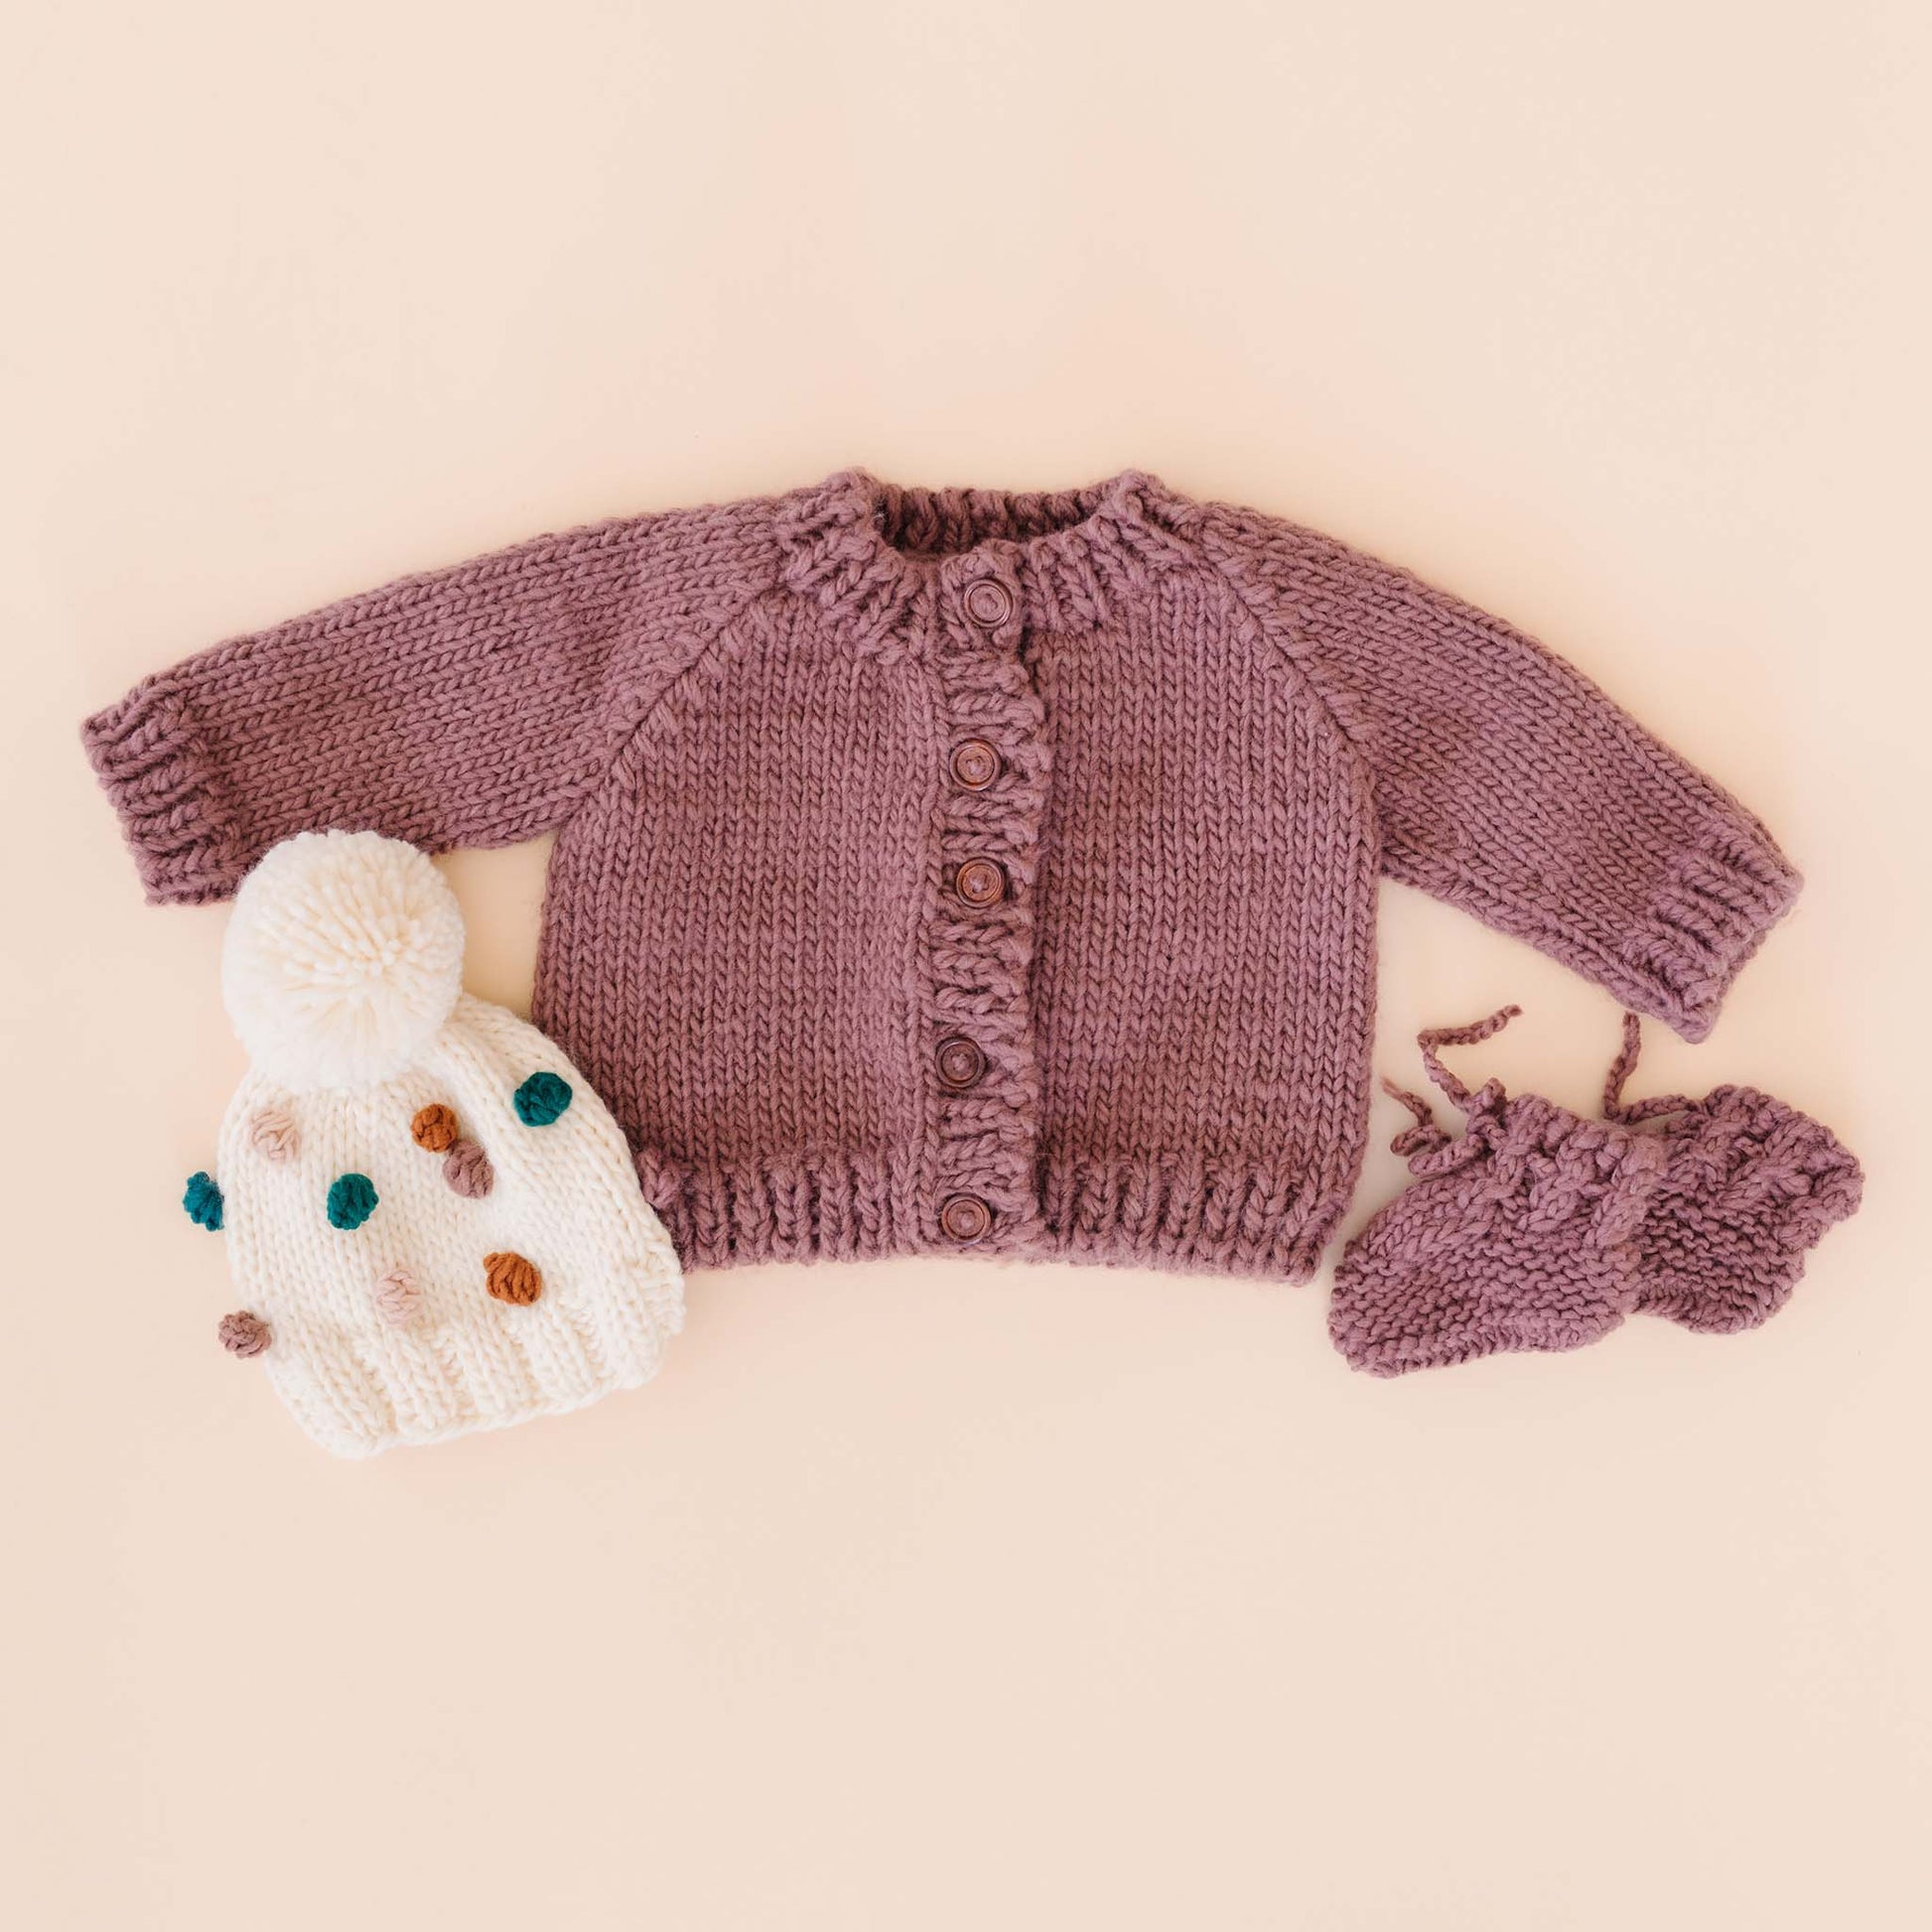 Blueberry Knitted Baby Set [FREE Knitting Pattern]